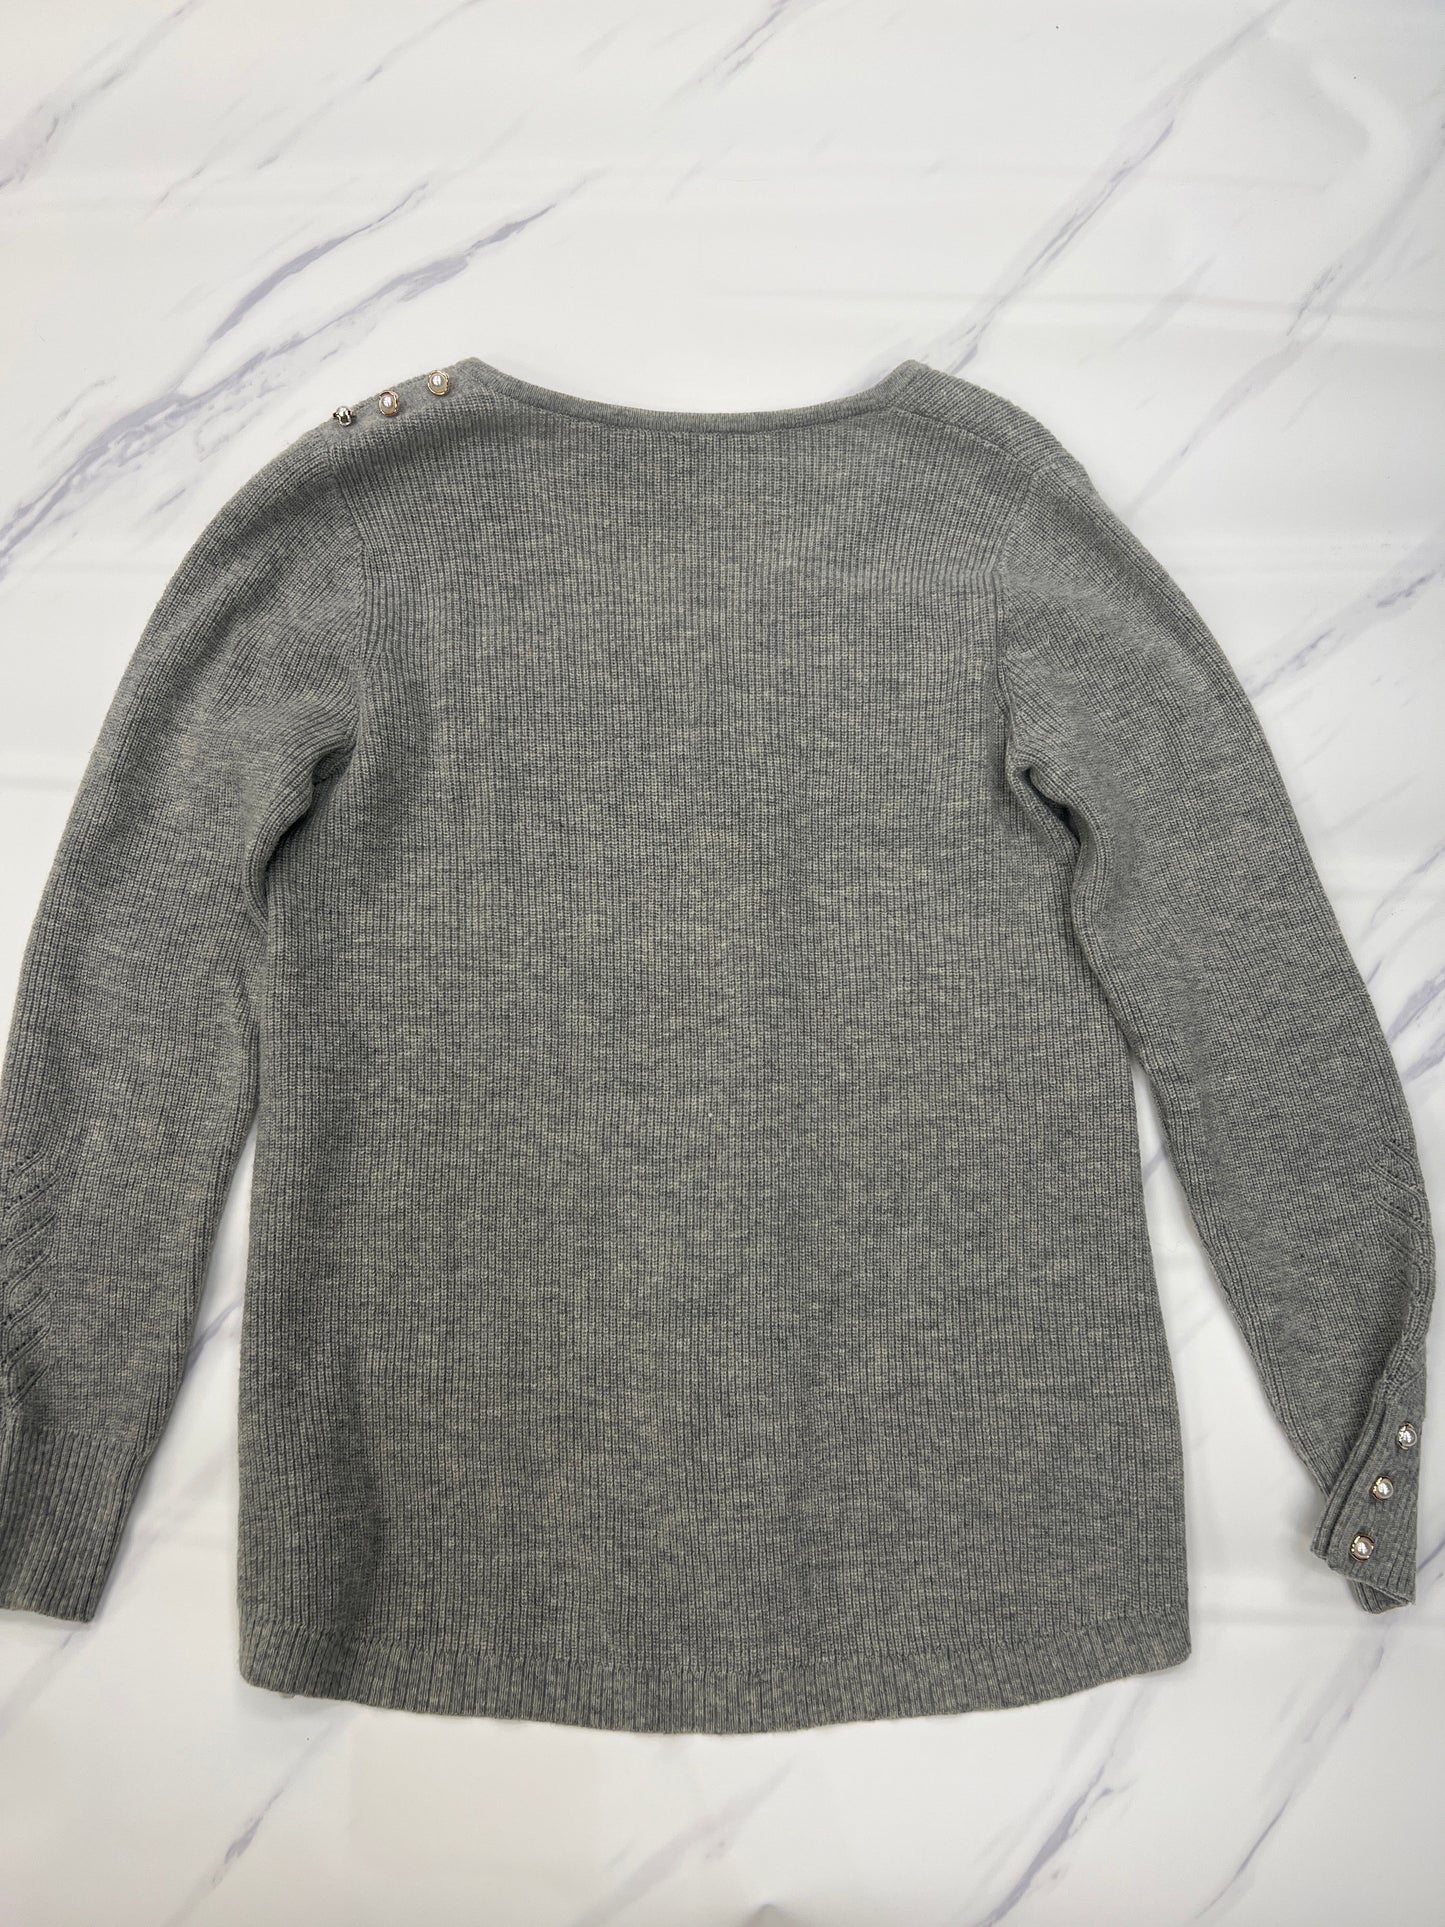 Sweater By Soft Surroundings  Size: Xs